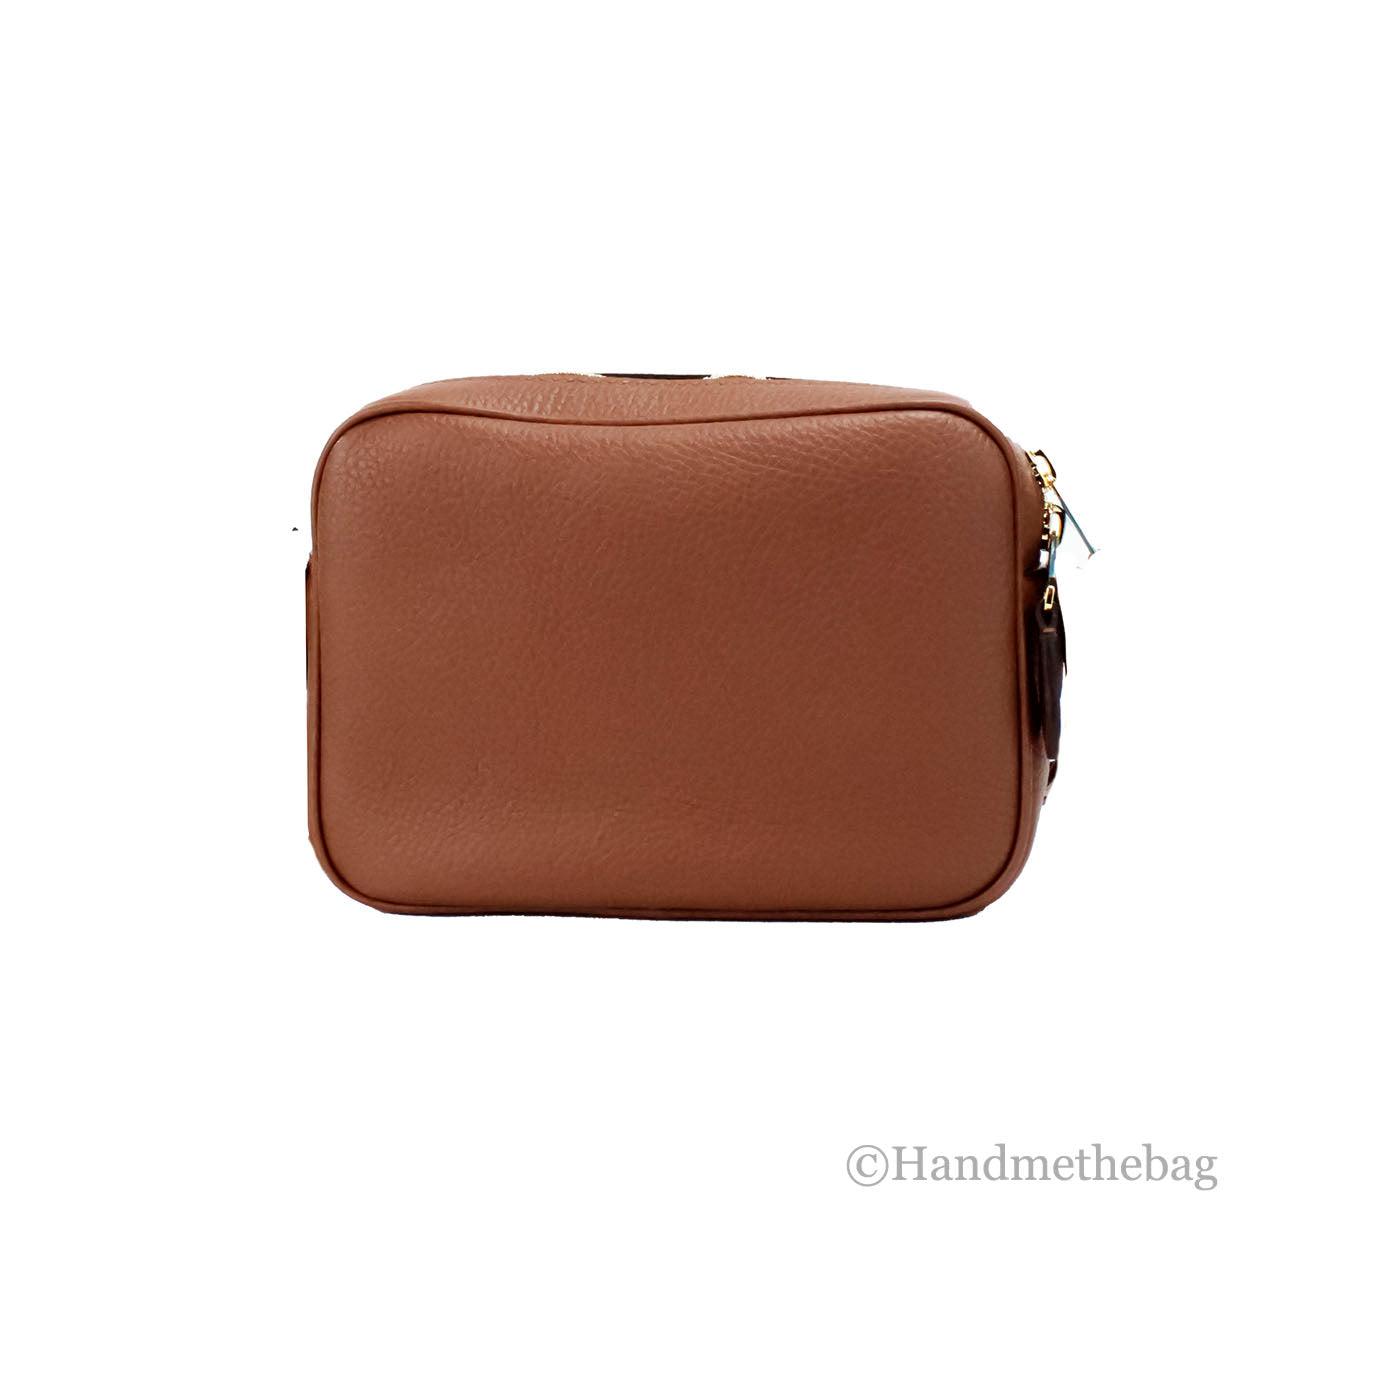 Burberry Small Branded Tan Leather Camera Crossbody Bag